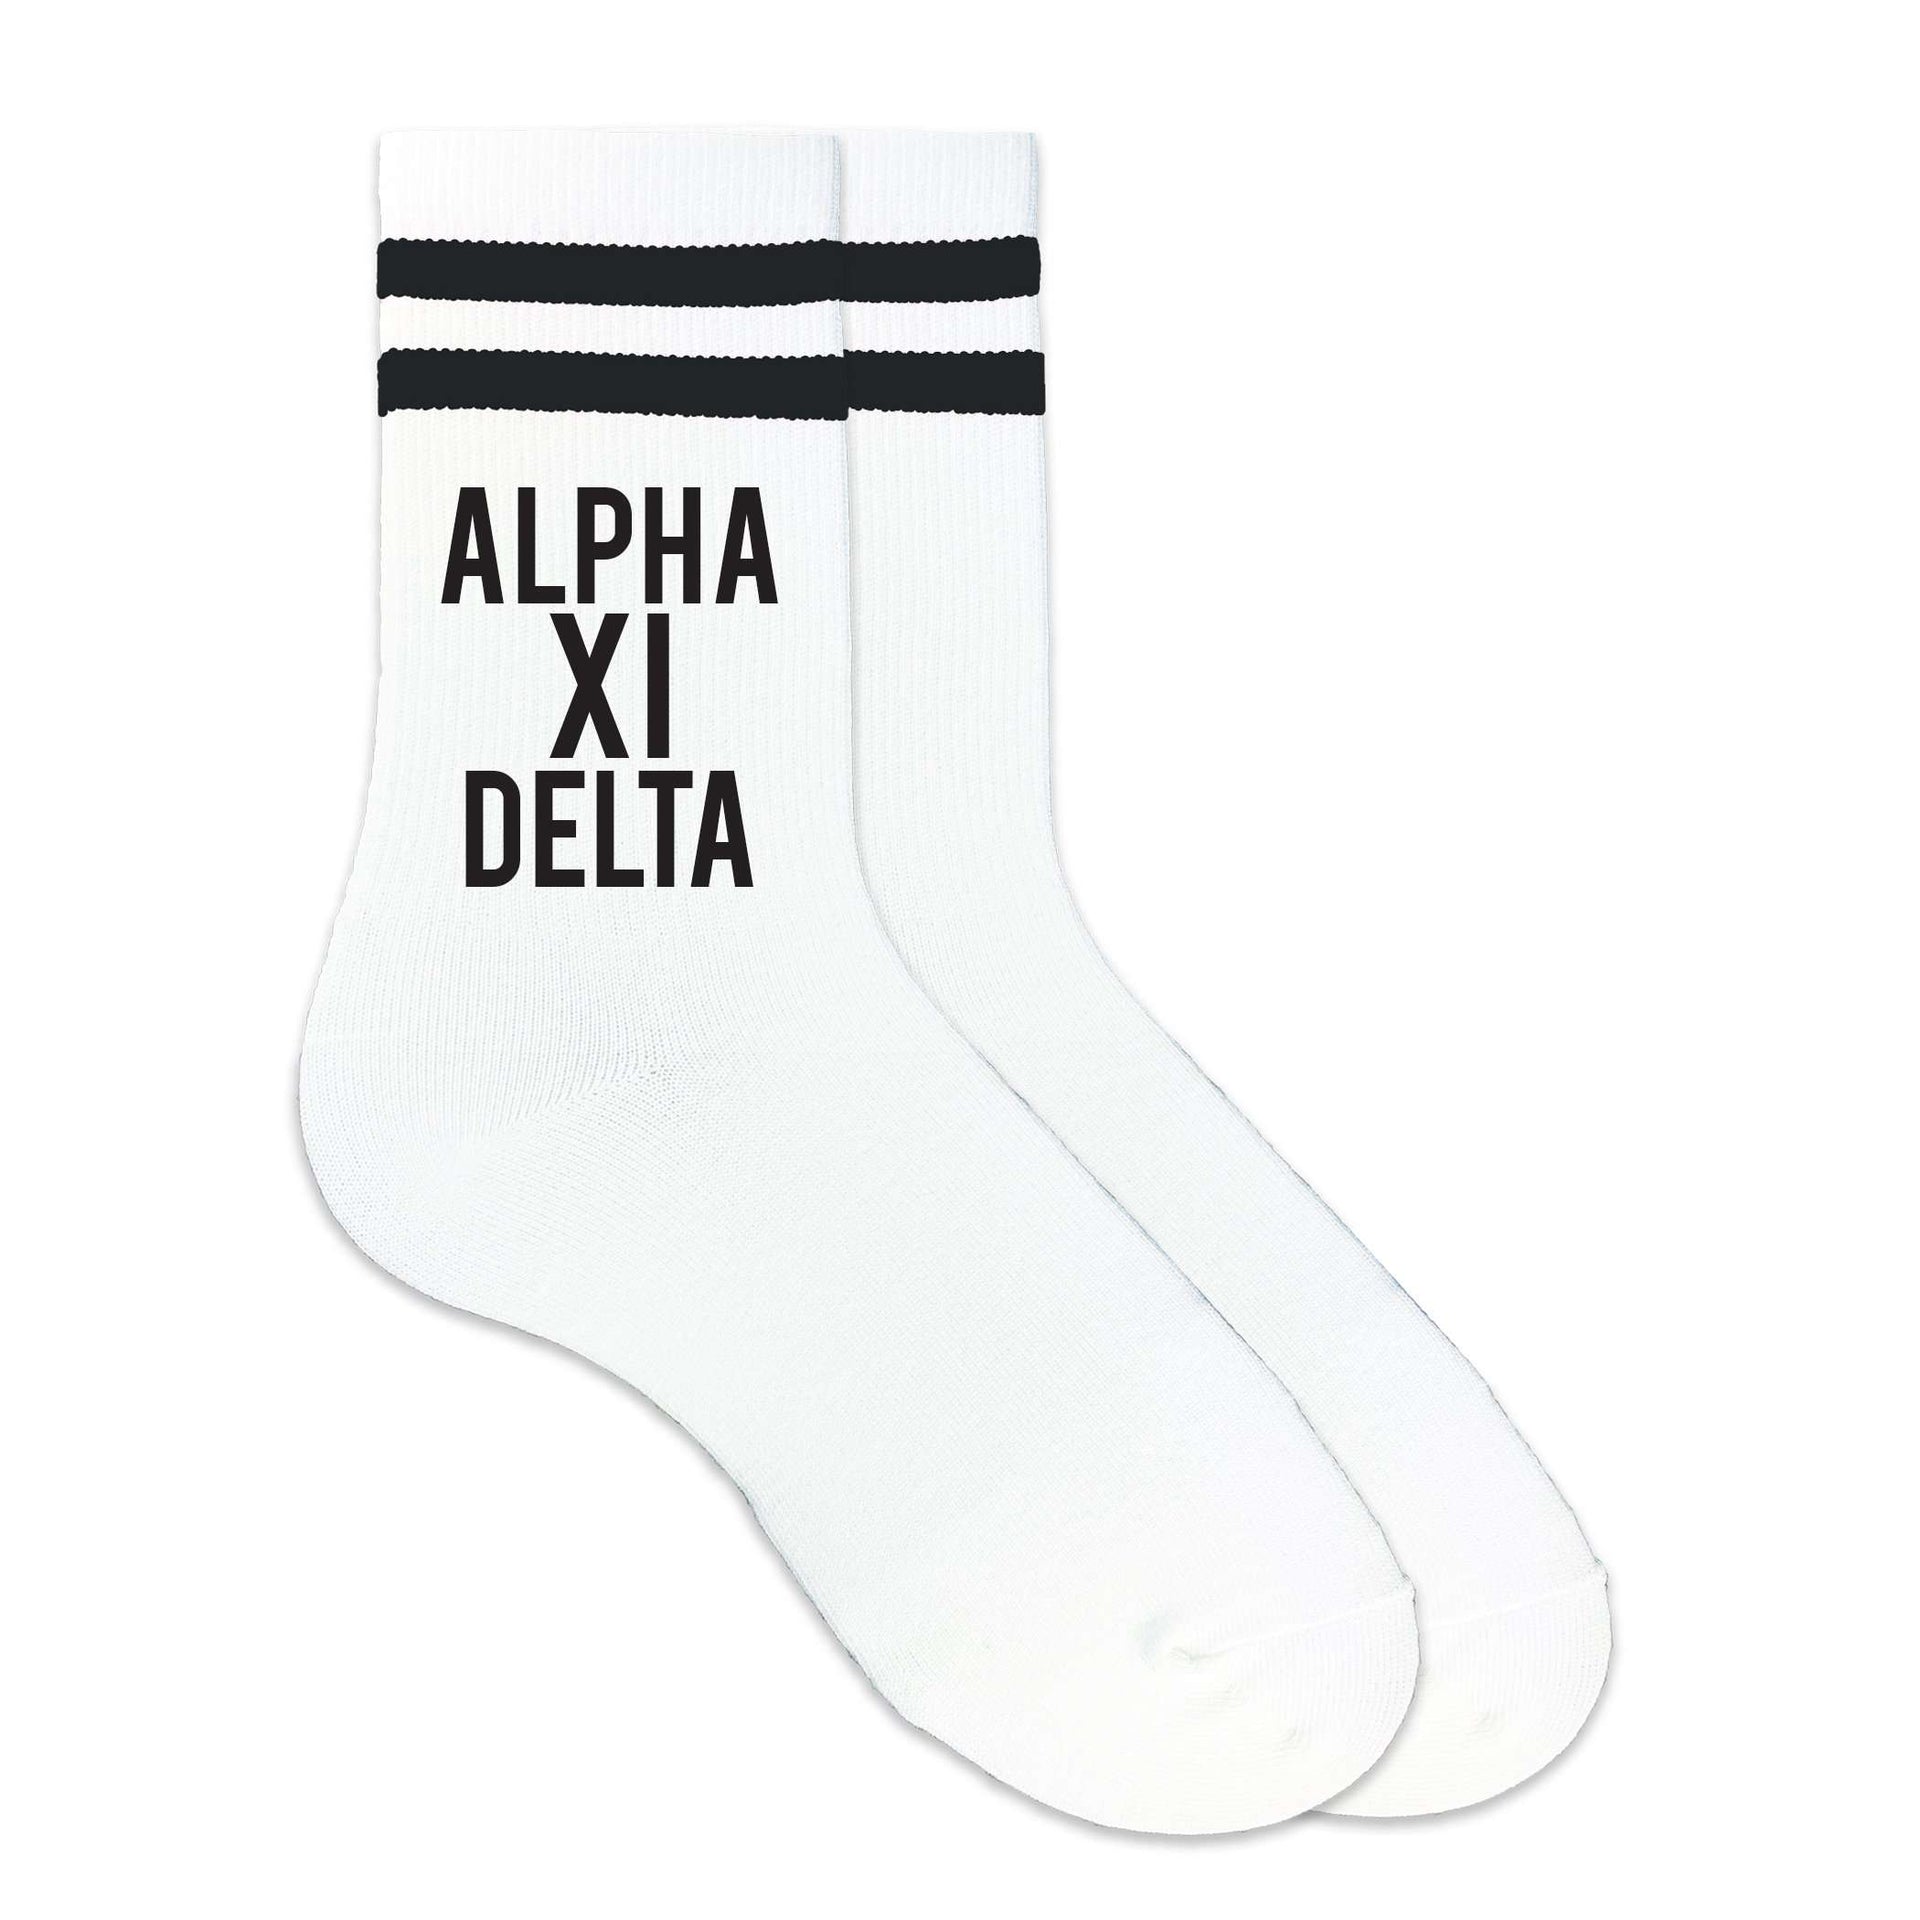 Alpha Xi Delta sorority name custom printed on striped crew socks